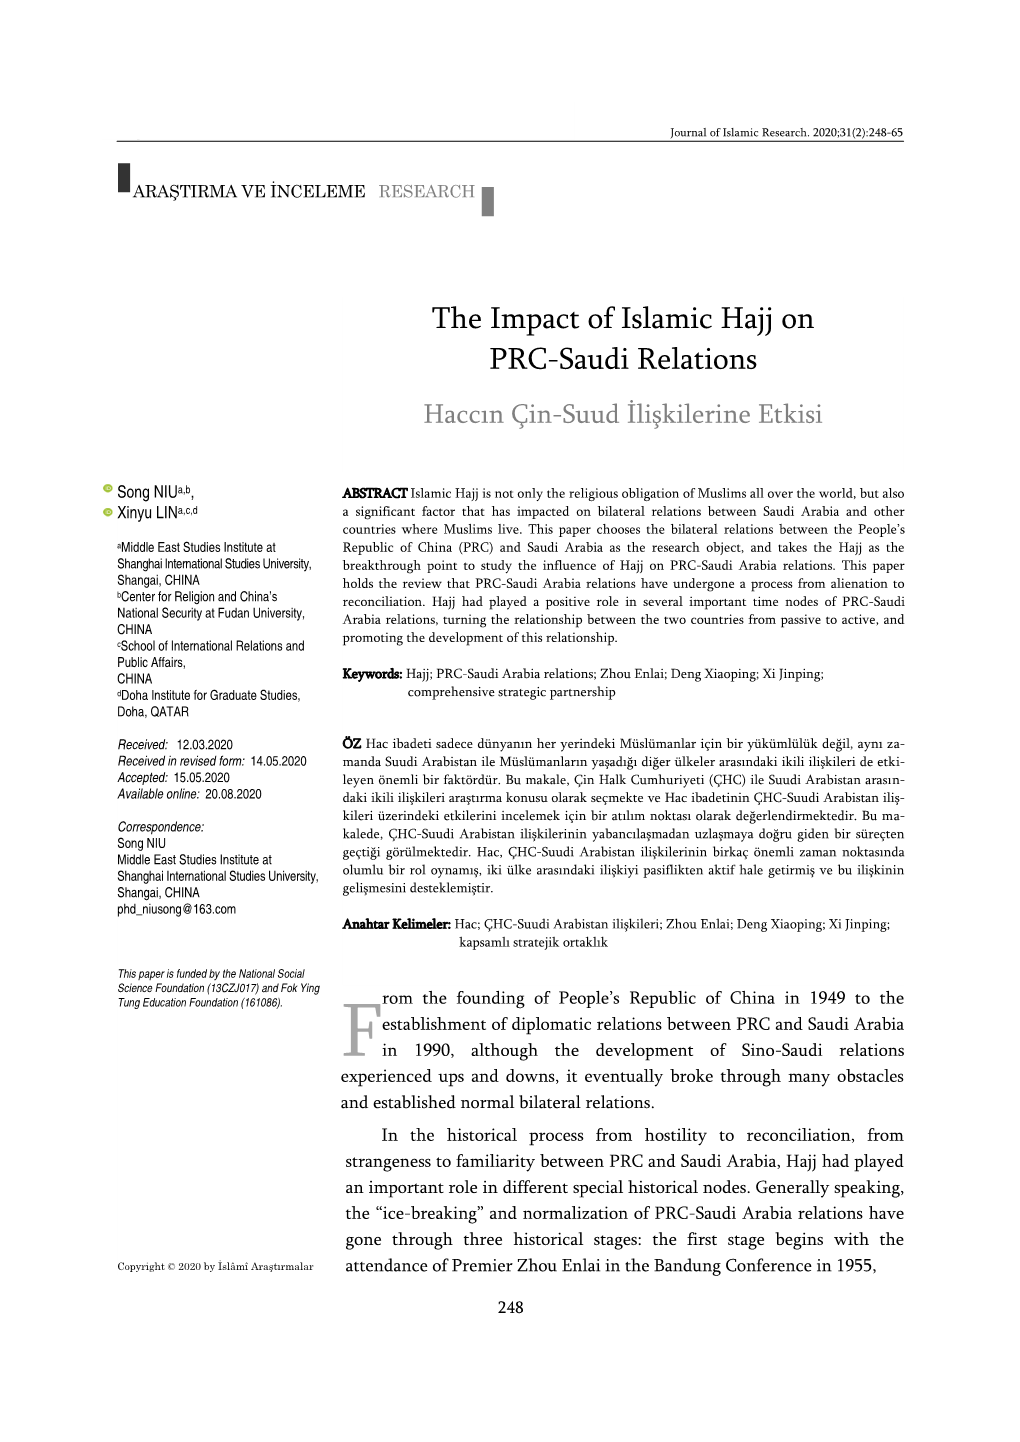 The Impact of Islamic Hajj on PRC-Saudi Relations